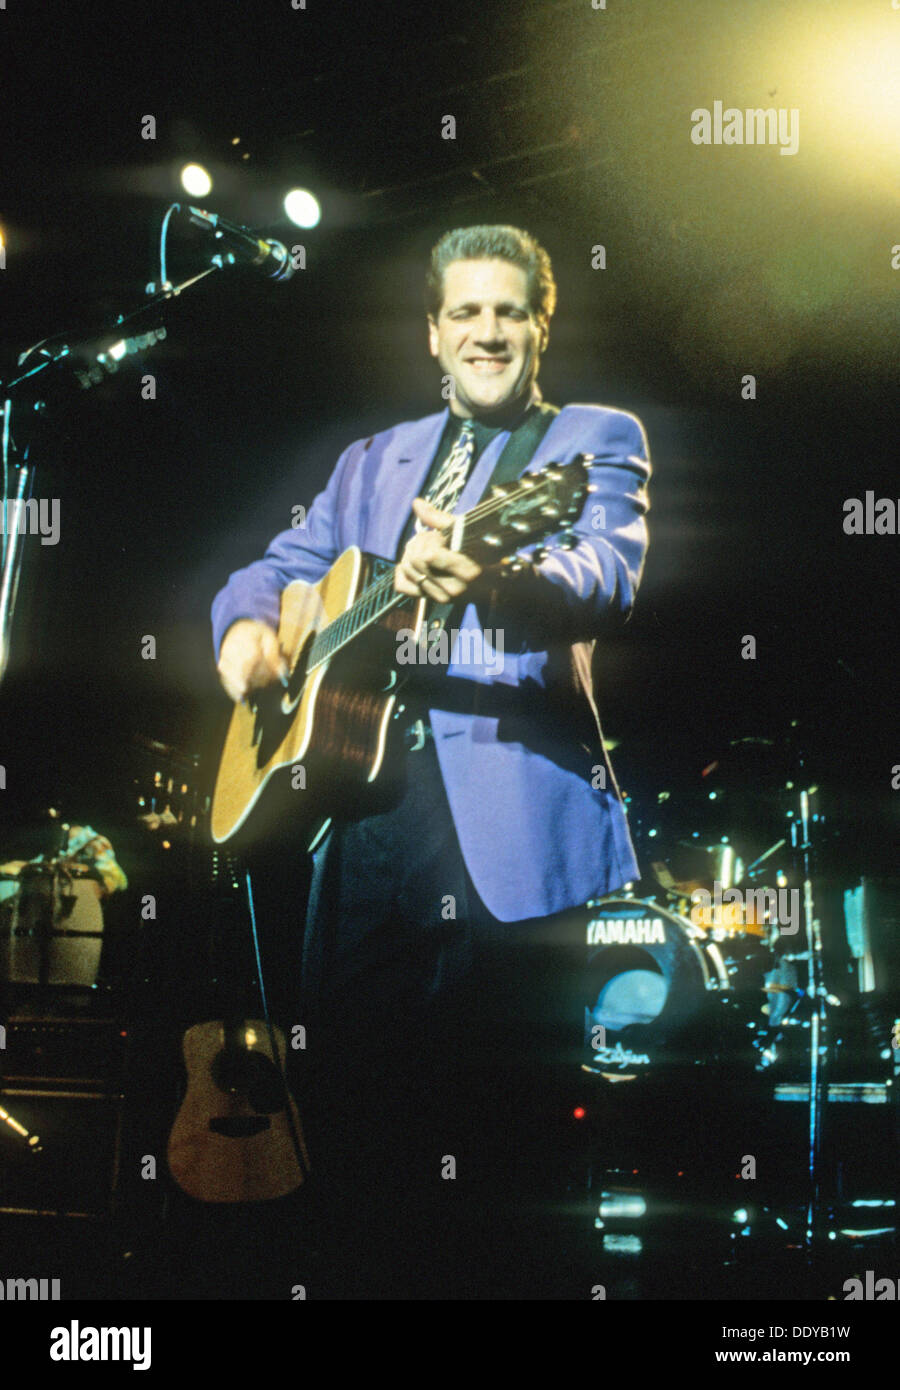 Photos: The life of Glenn Frey